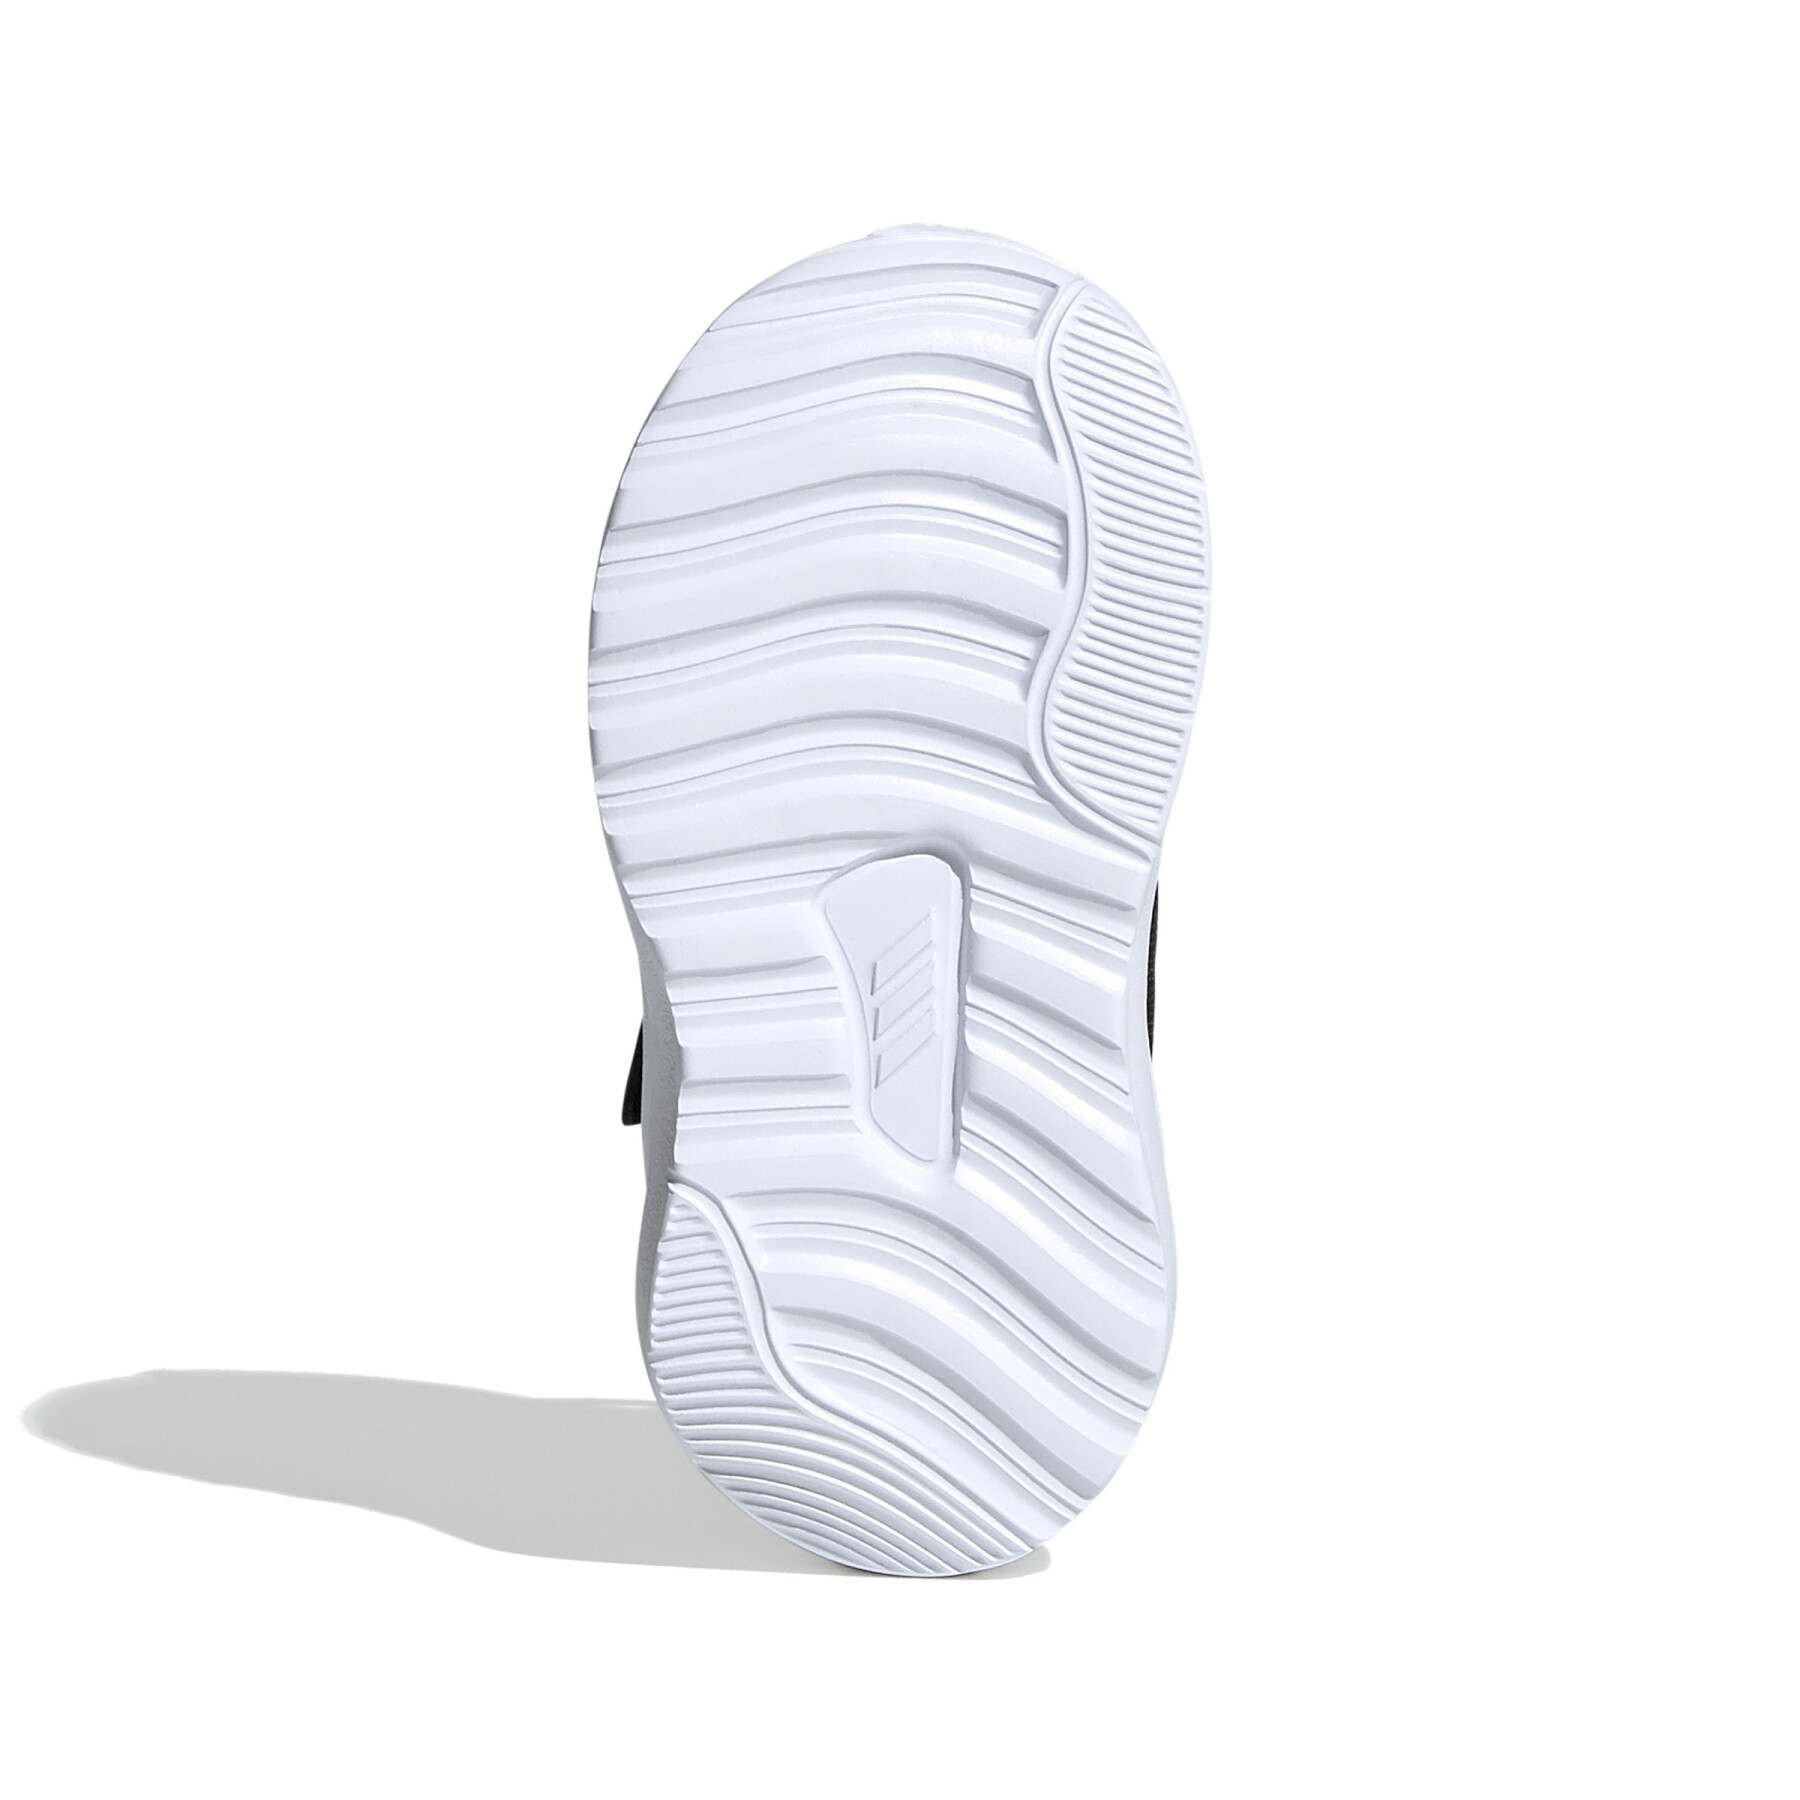 Children's sneakers adidas FortaRun Running 2020